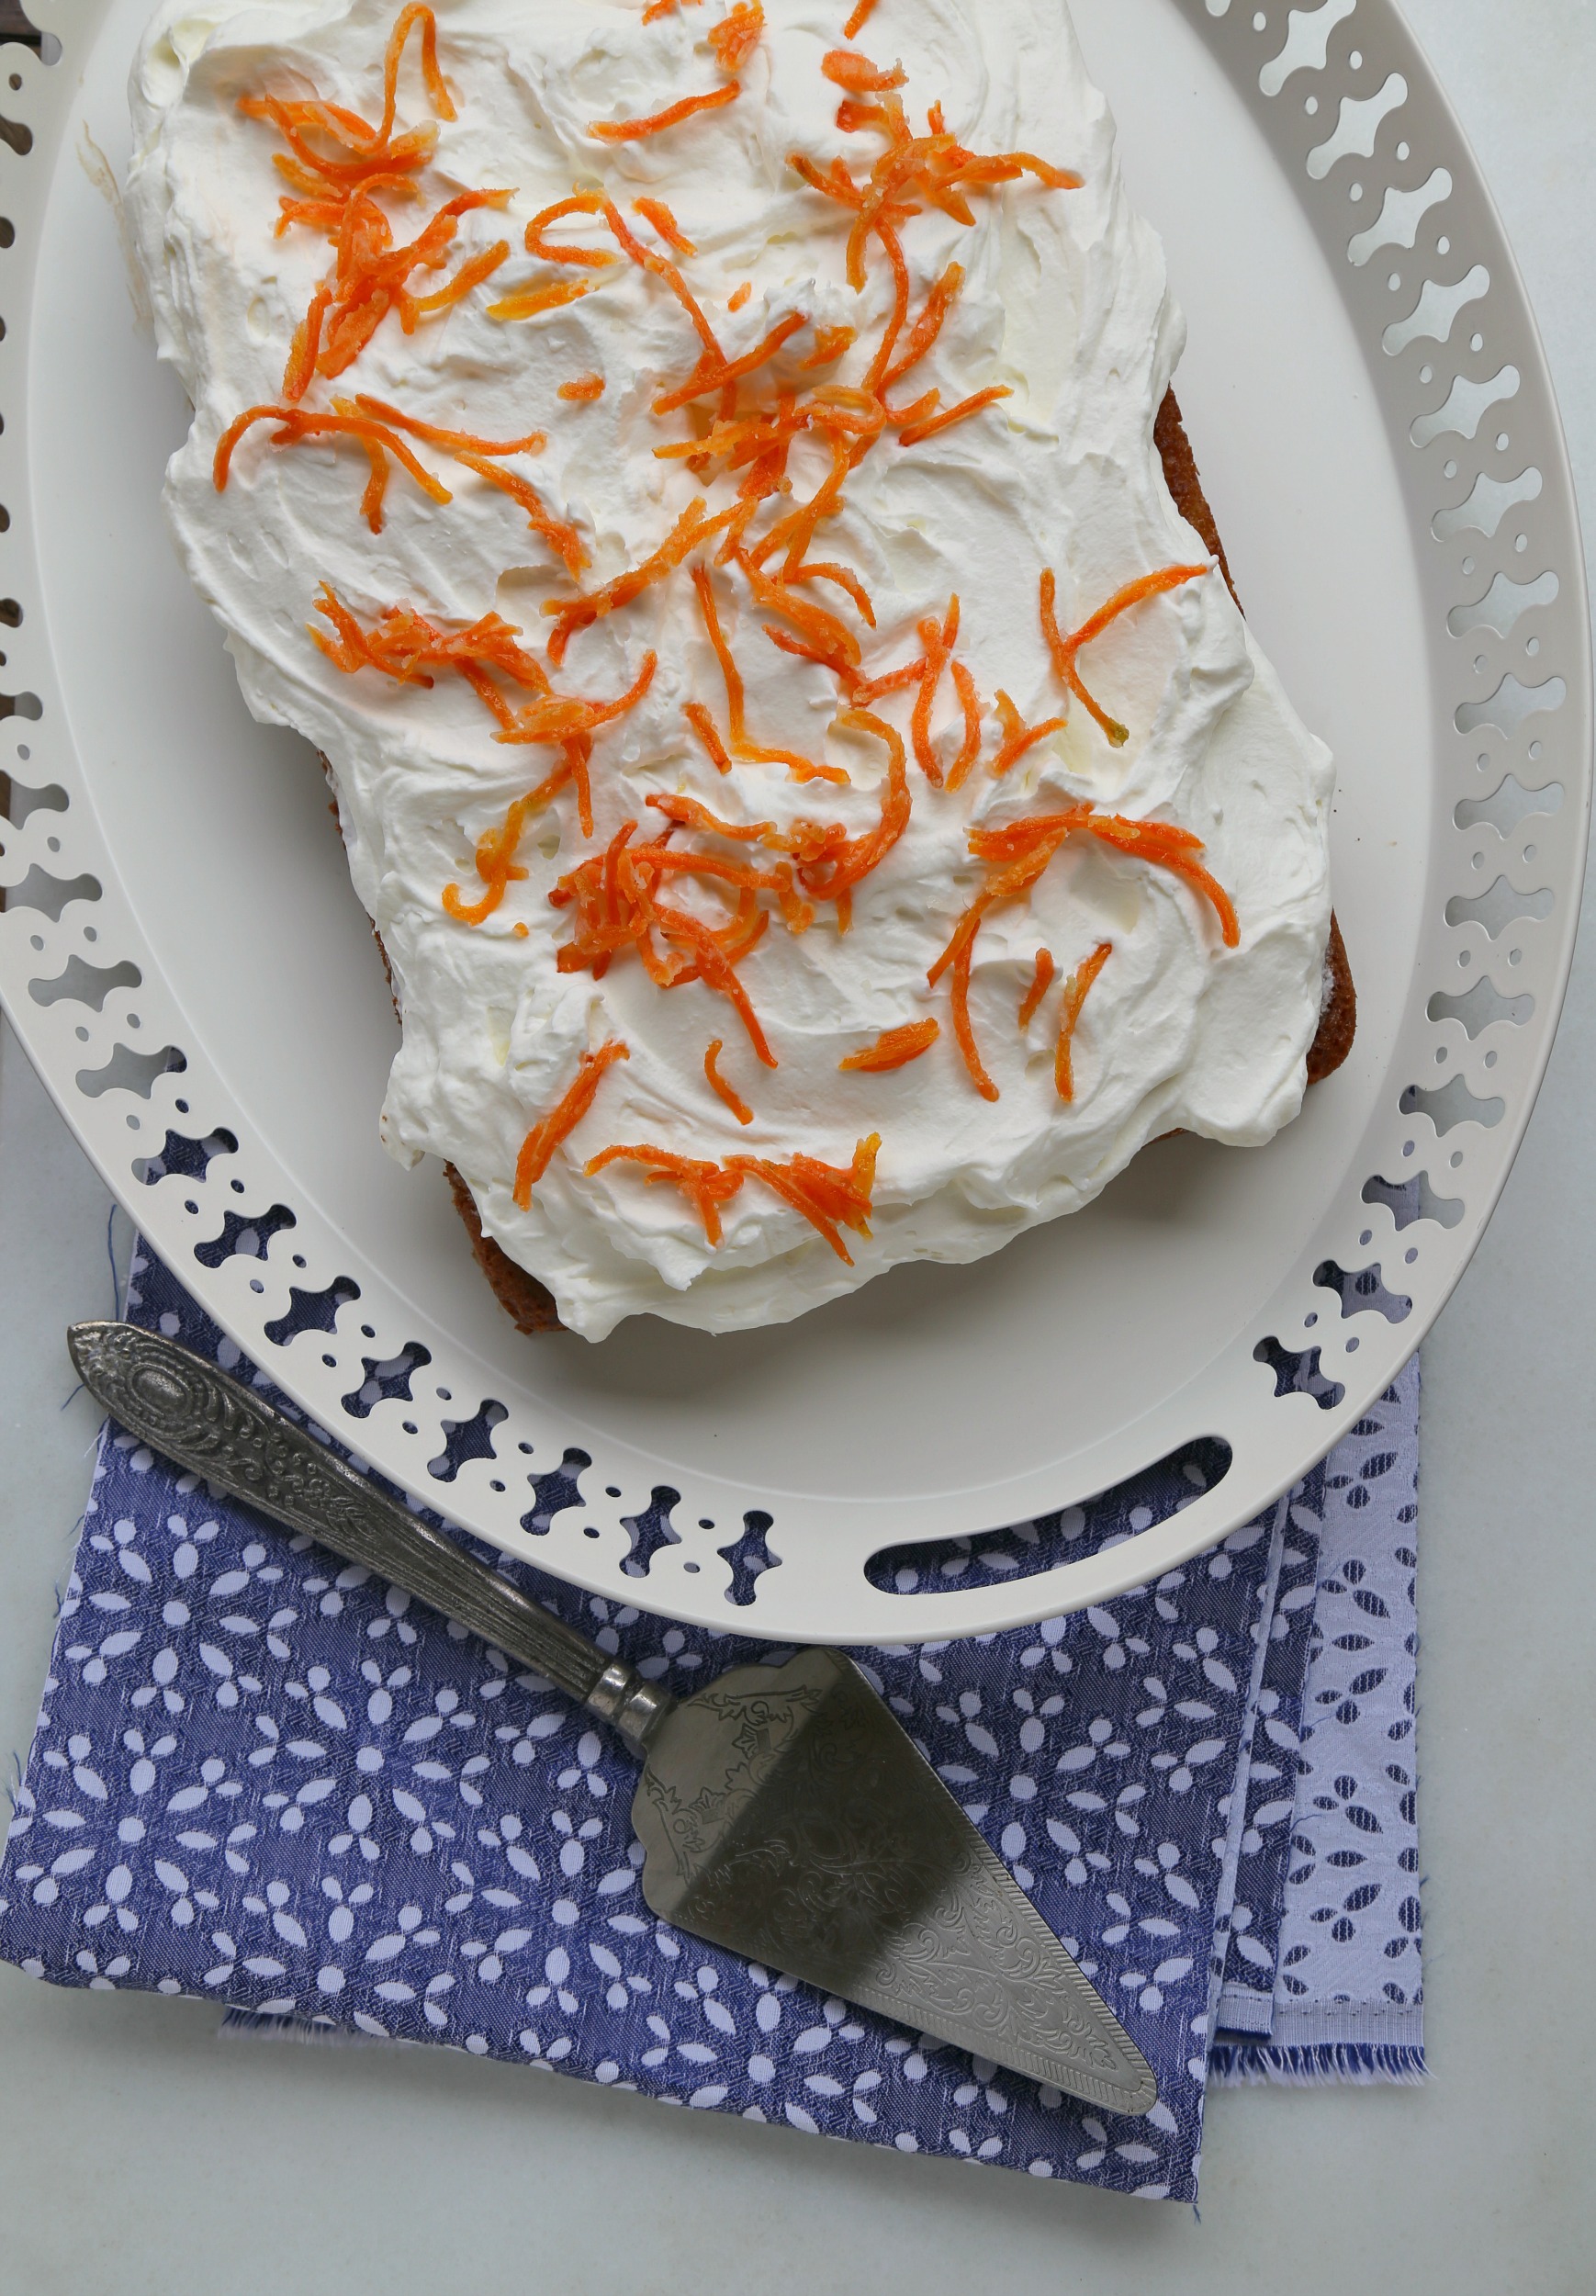 carrot-tres-leches-cake-vianneyrodriguez-sweetlifebake